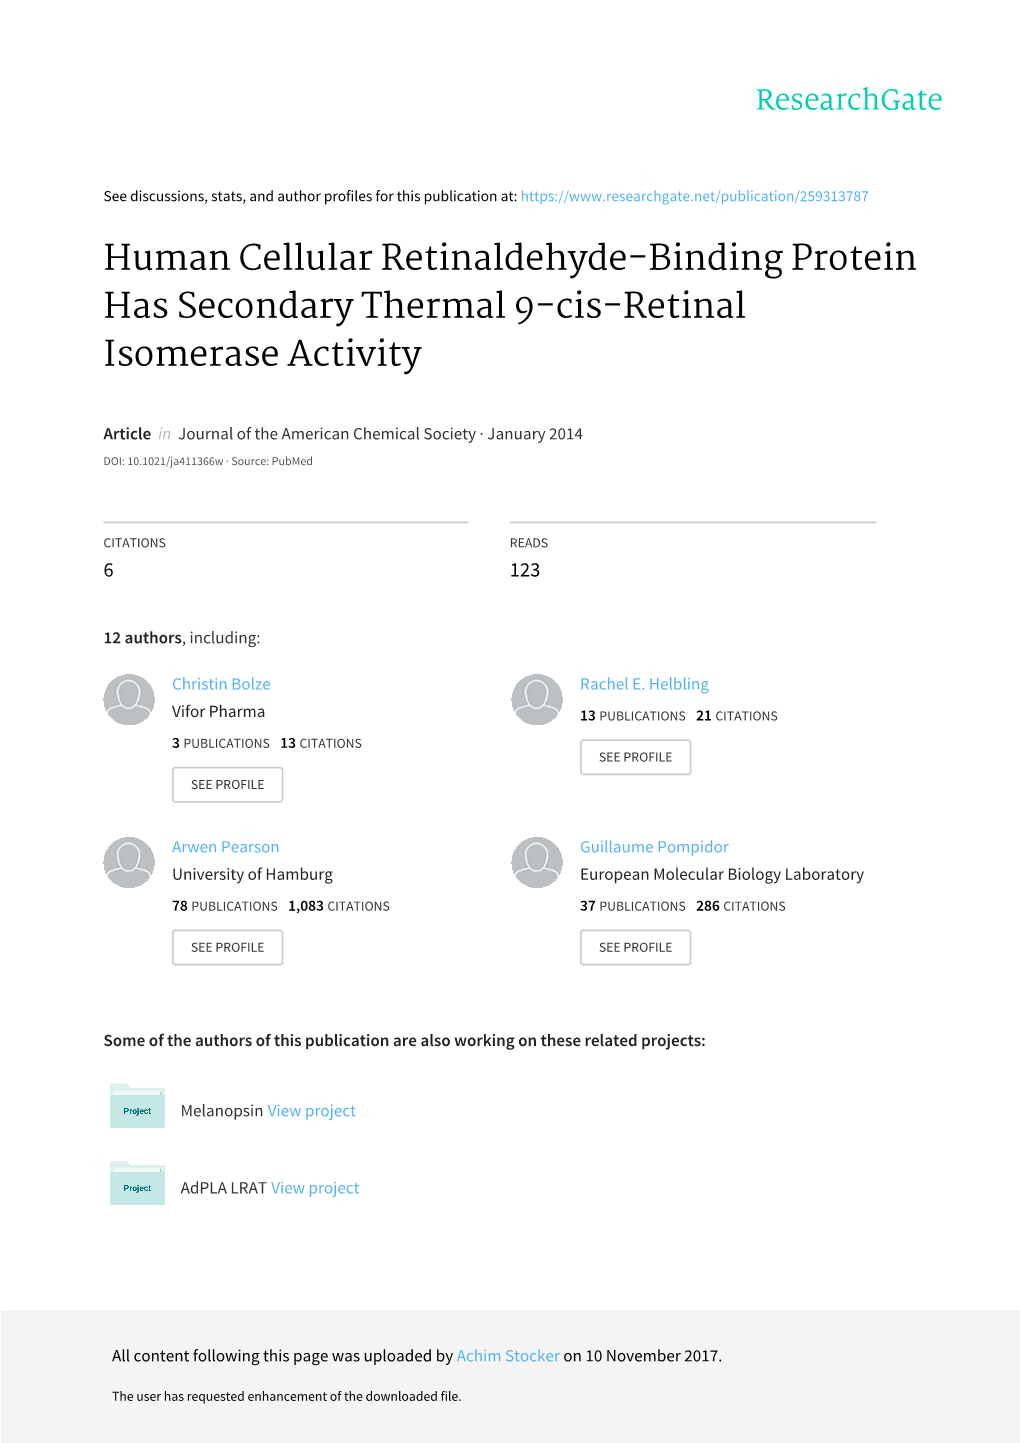 Human Cellular Retinaldehyde-Binding Protein Has Secondary Thermal 9-Cis-Retinal Isomerase Activity